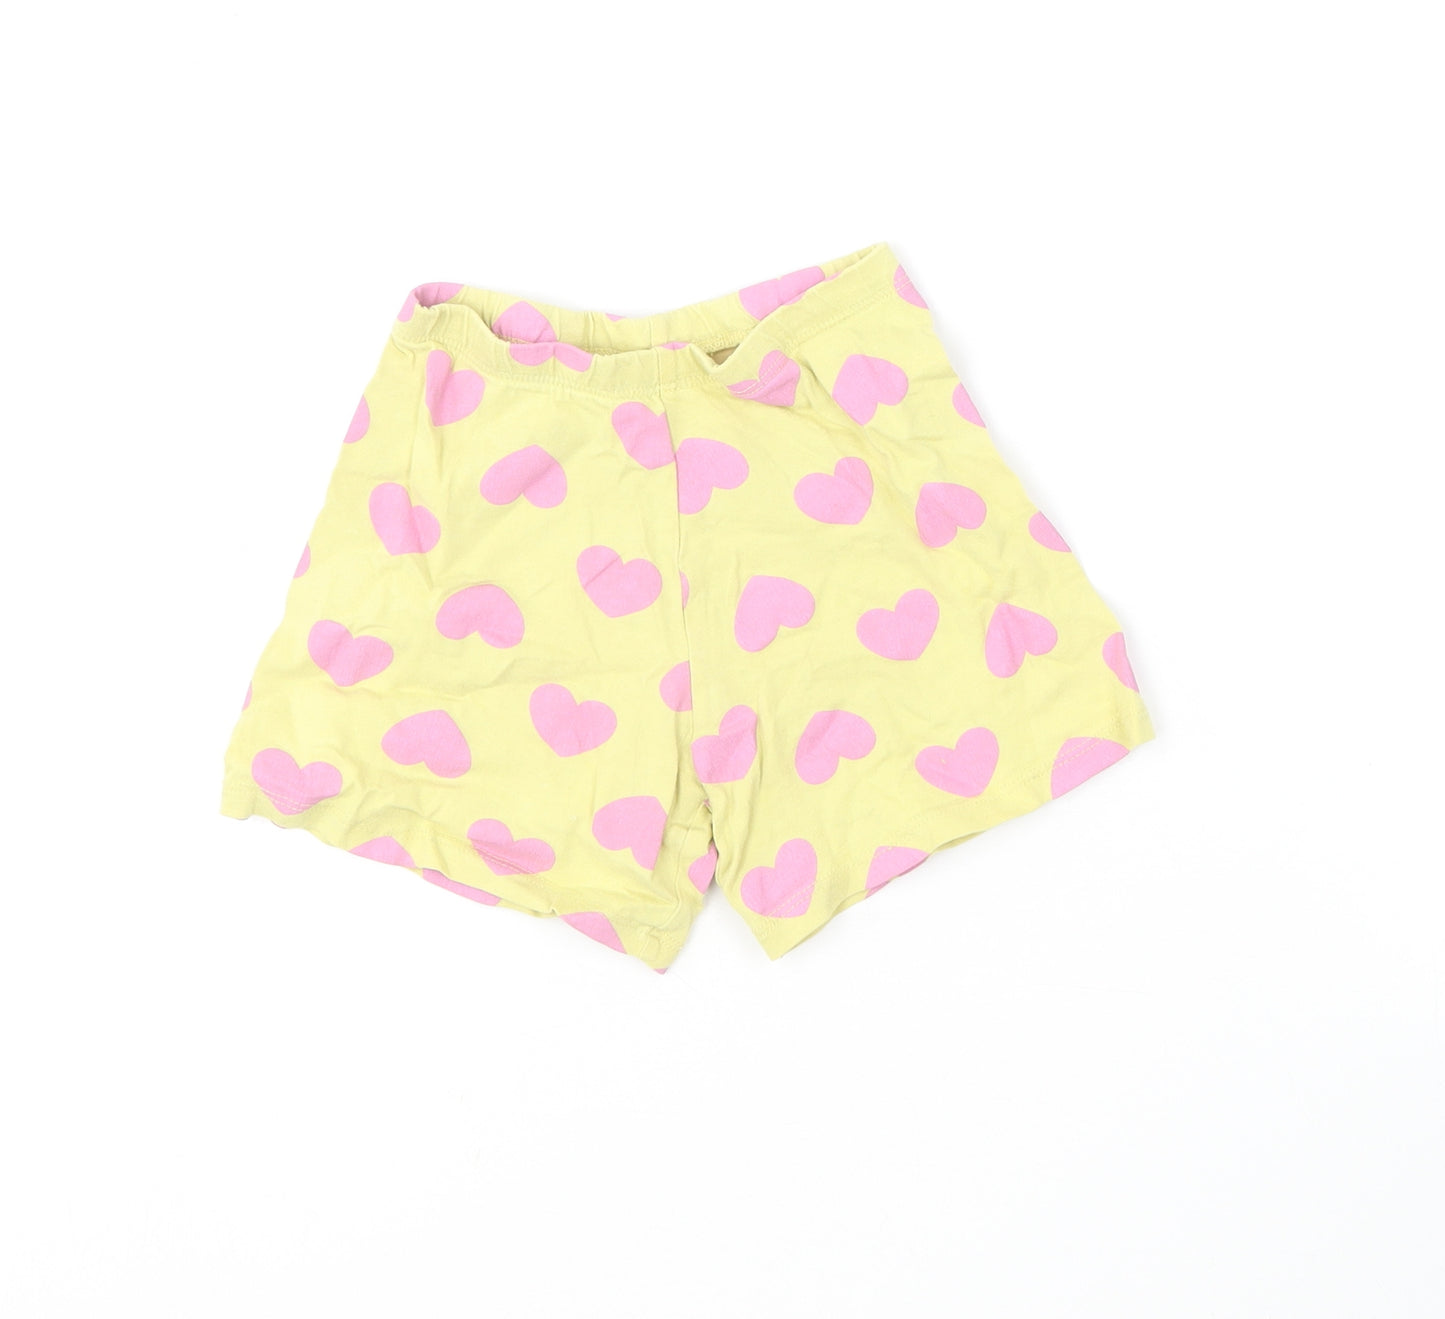 Mothercare Girls Yellow Geometric Cotton Sweat Shorts Size 2-3 Years  Regular  - Love Hearts